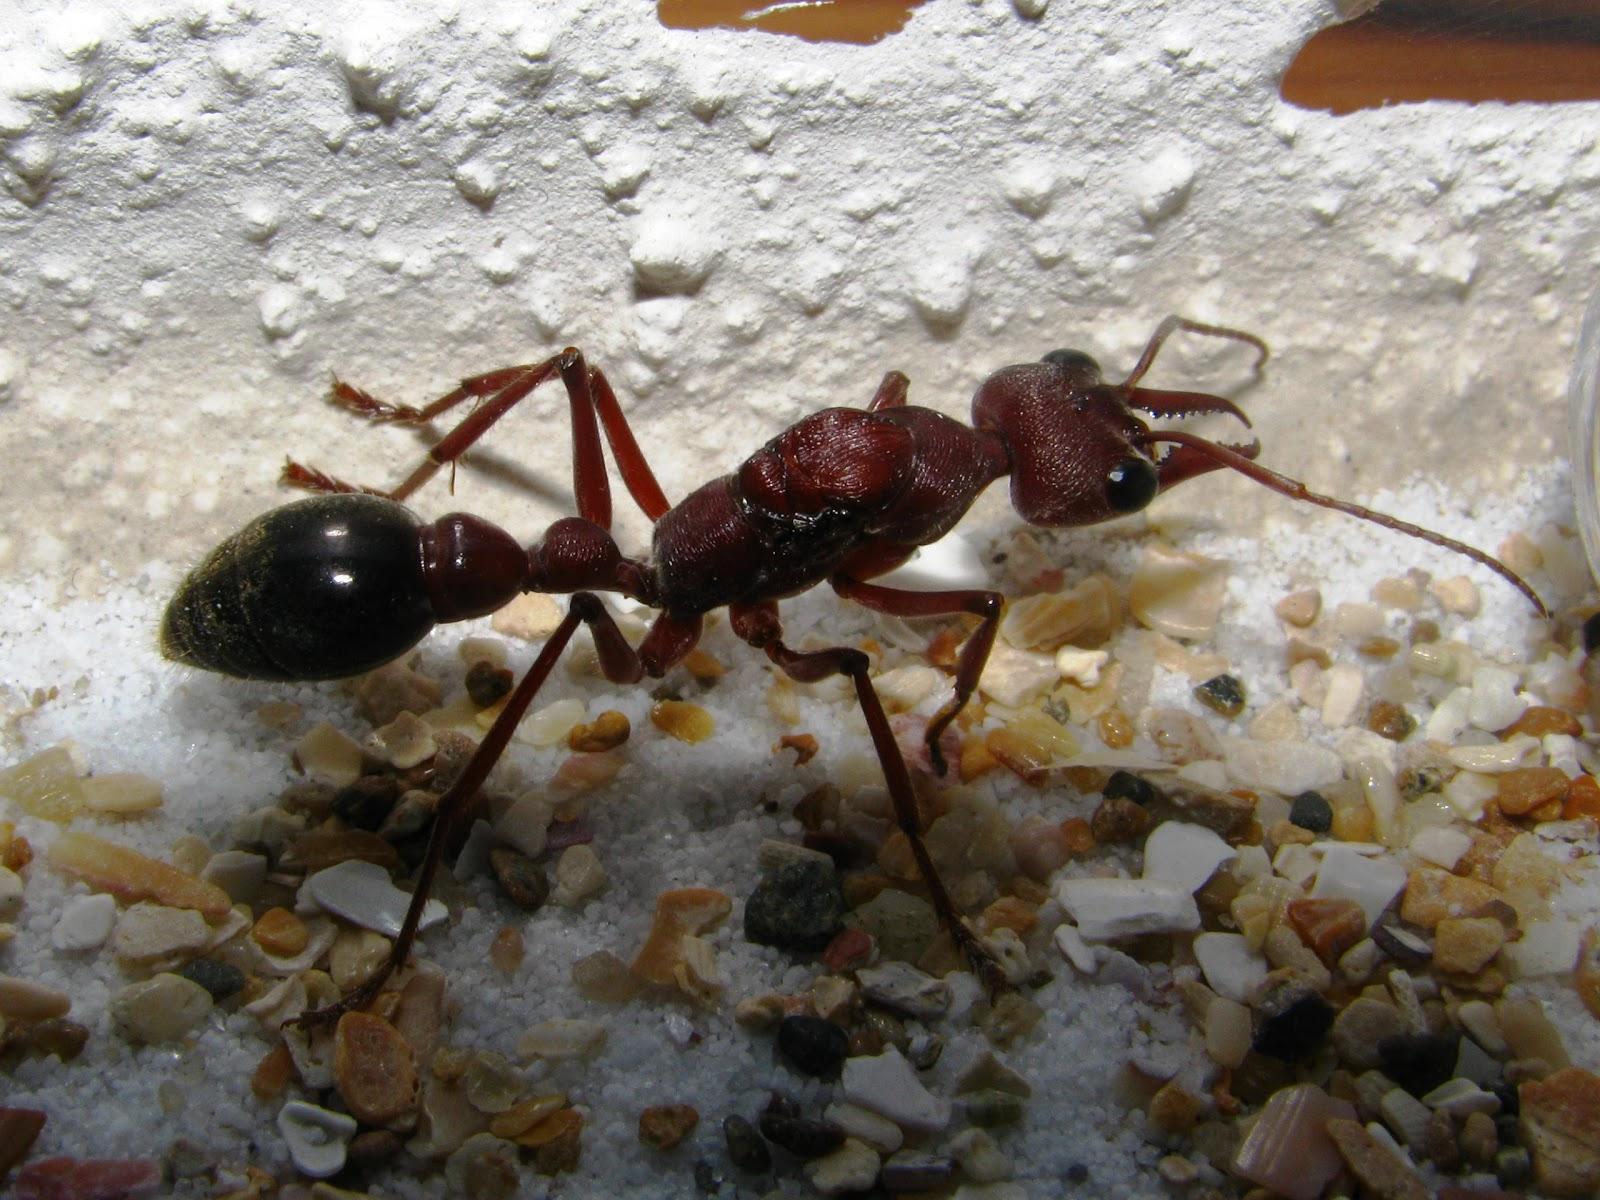 Ants Wallpaper